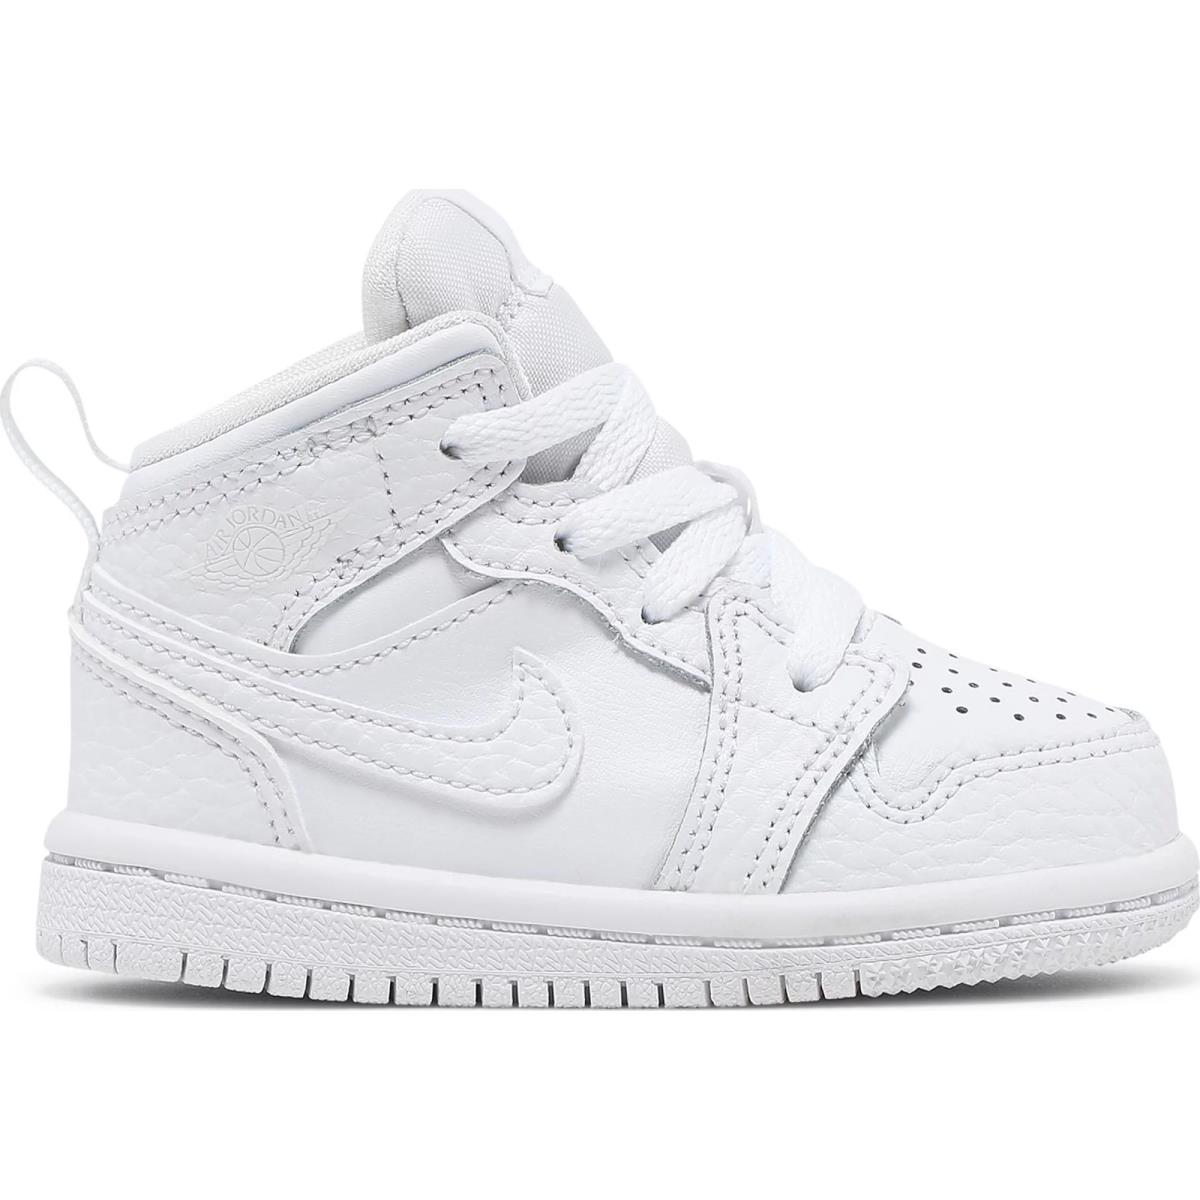 Nike Air Jordan 1 Mid TD Triple White Toddler Sneakers Shoes 640735-130 10C